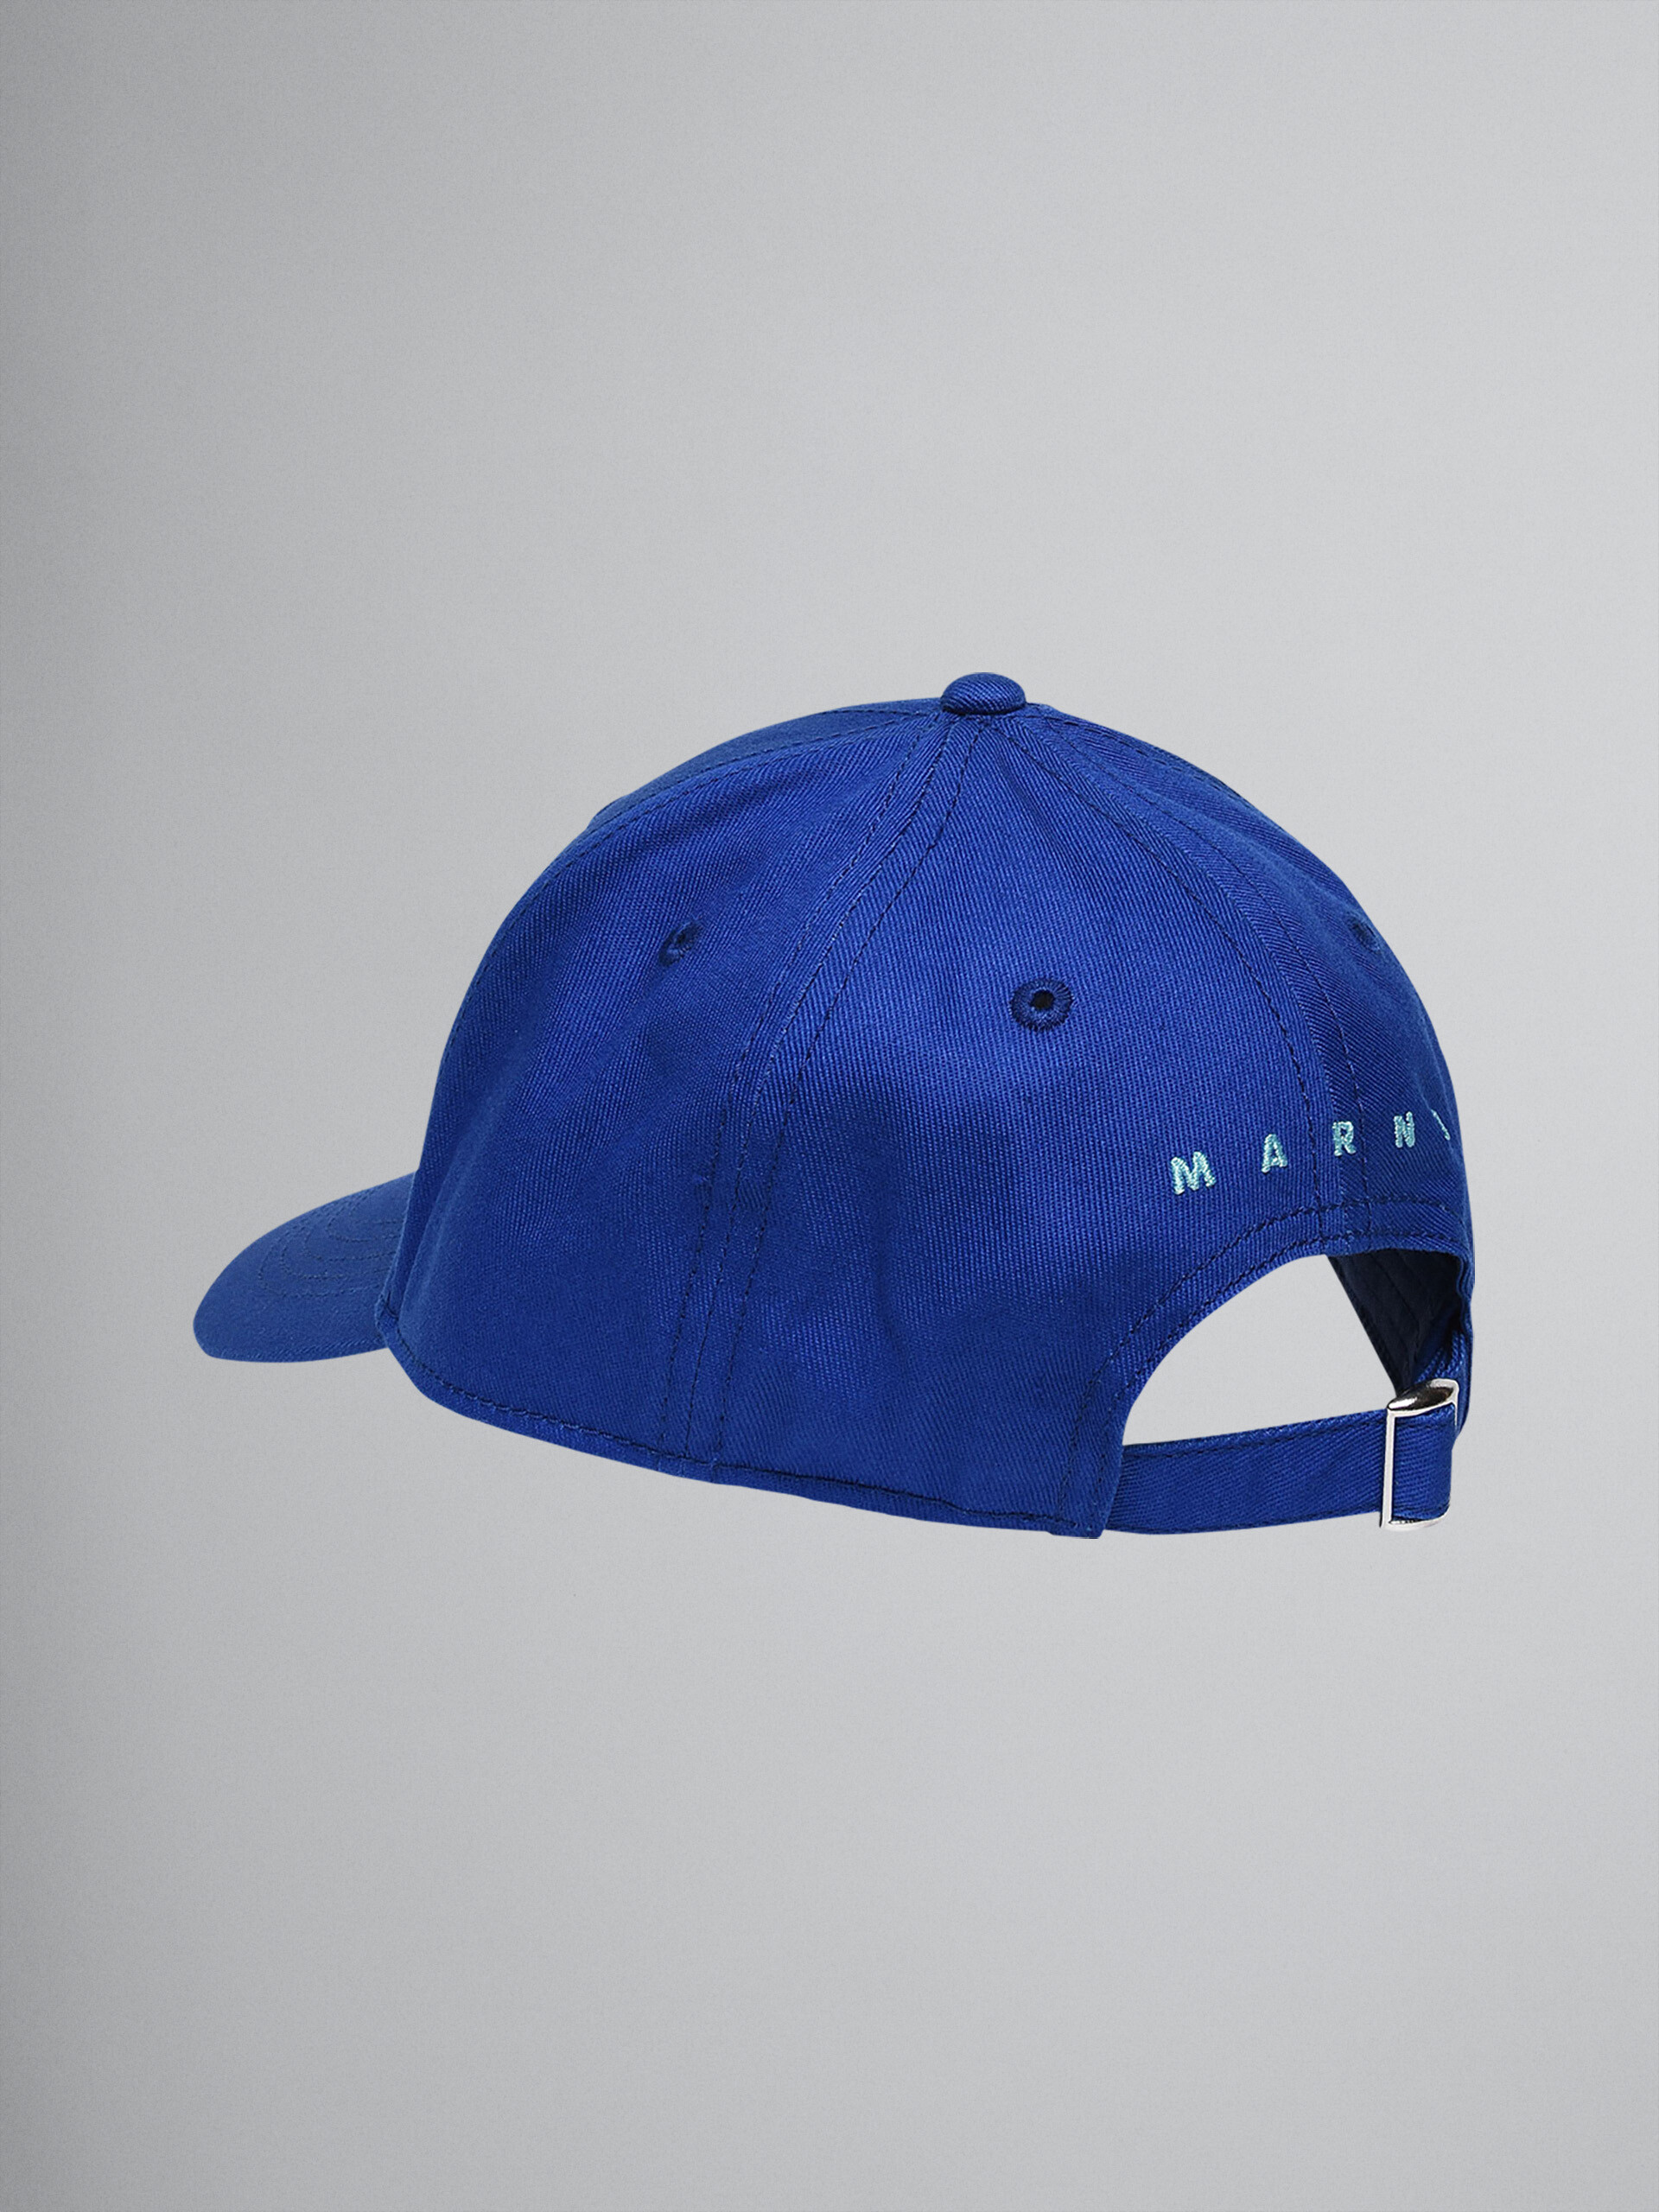 "M" blue cotton gabardine baseball cap - Caps - Image 2